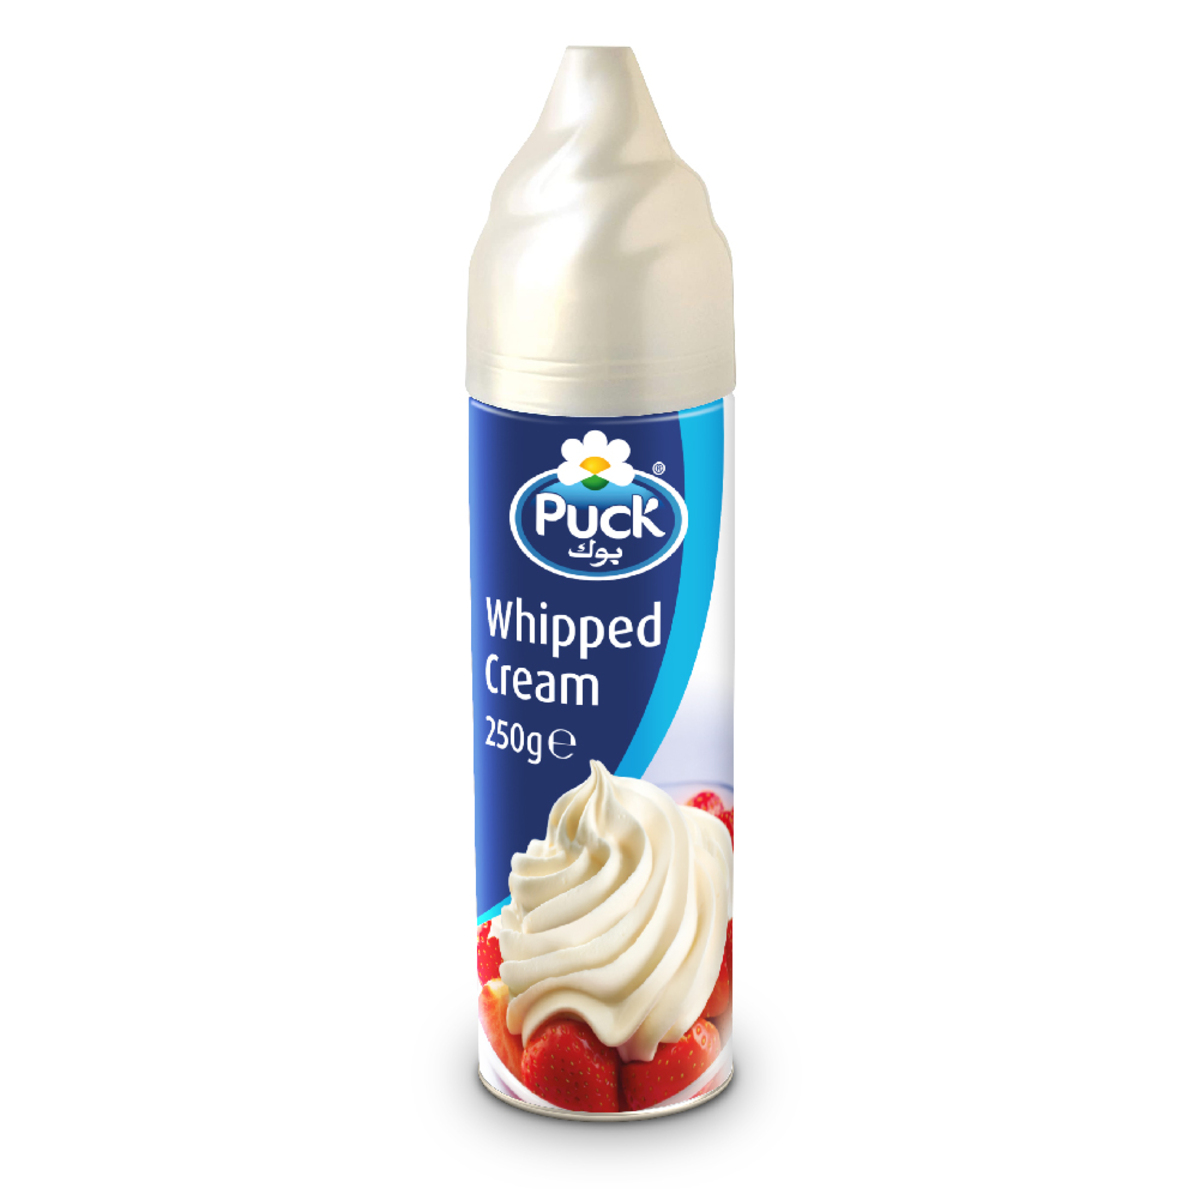 Whipped cream spray